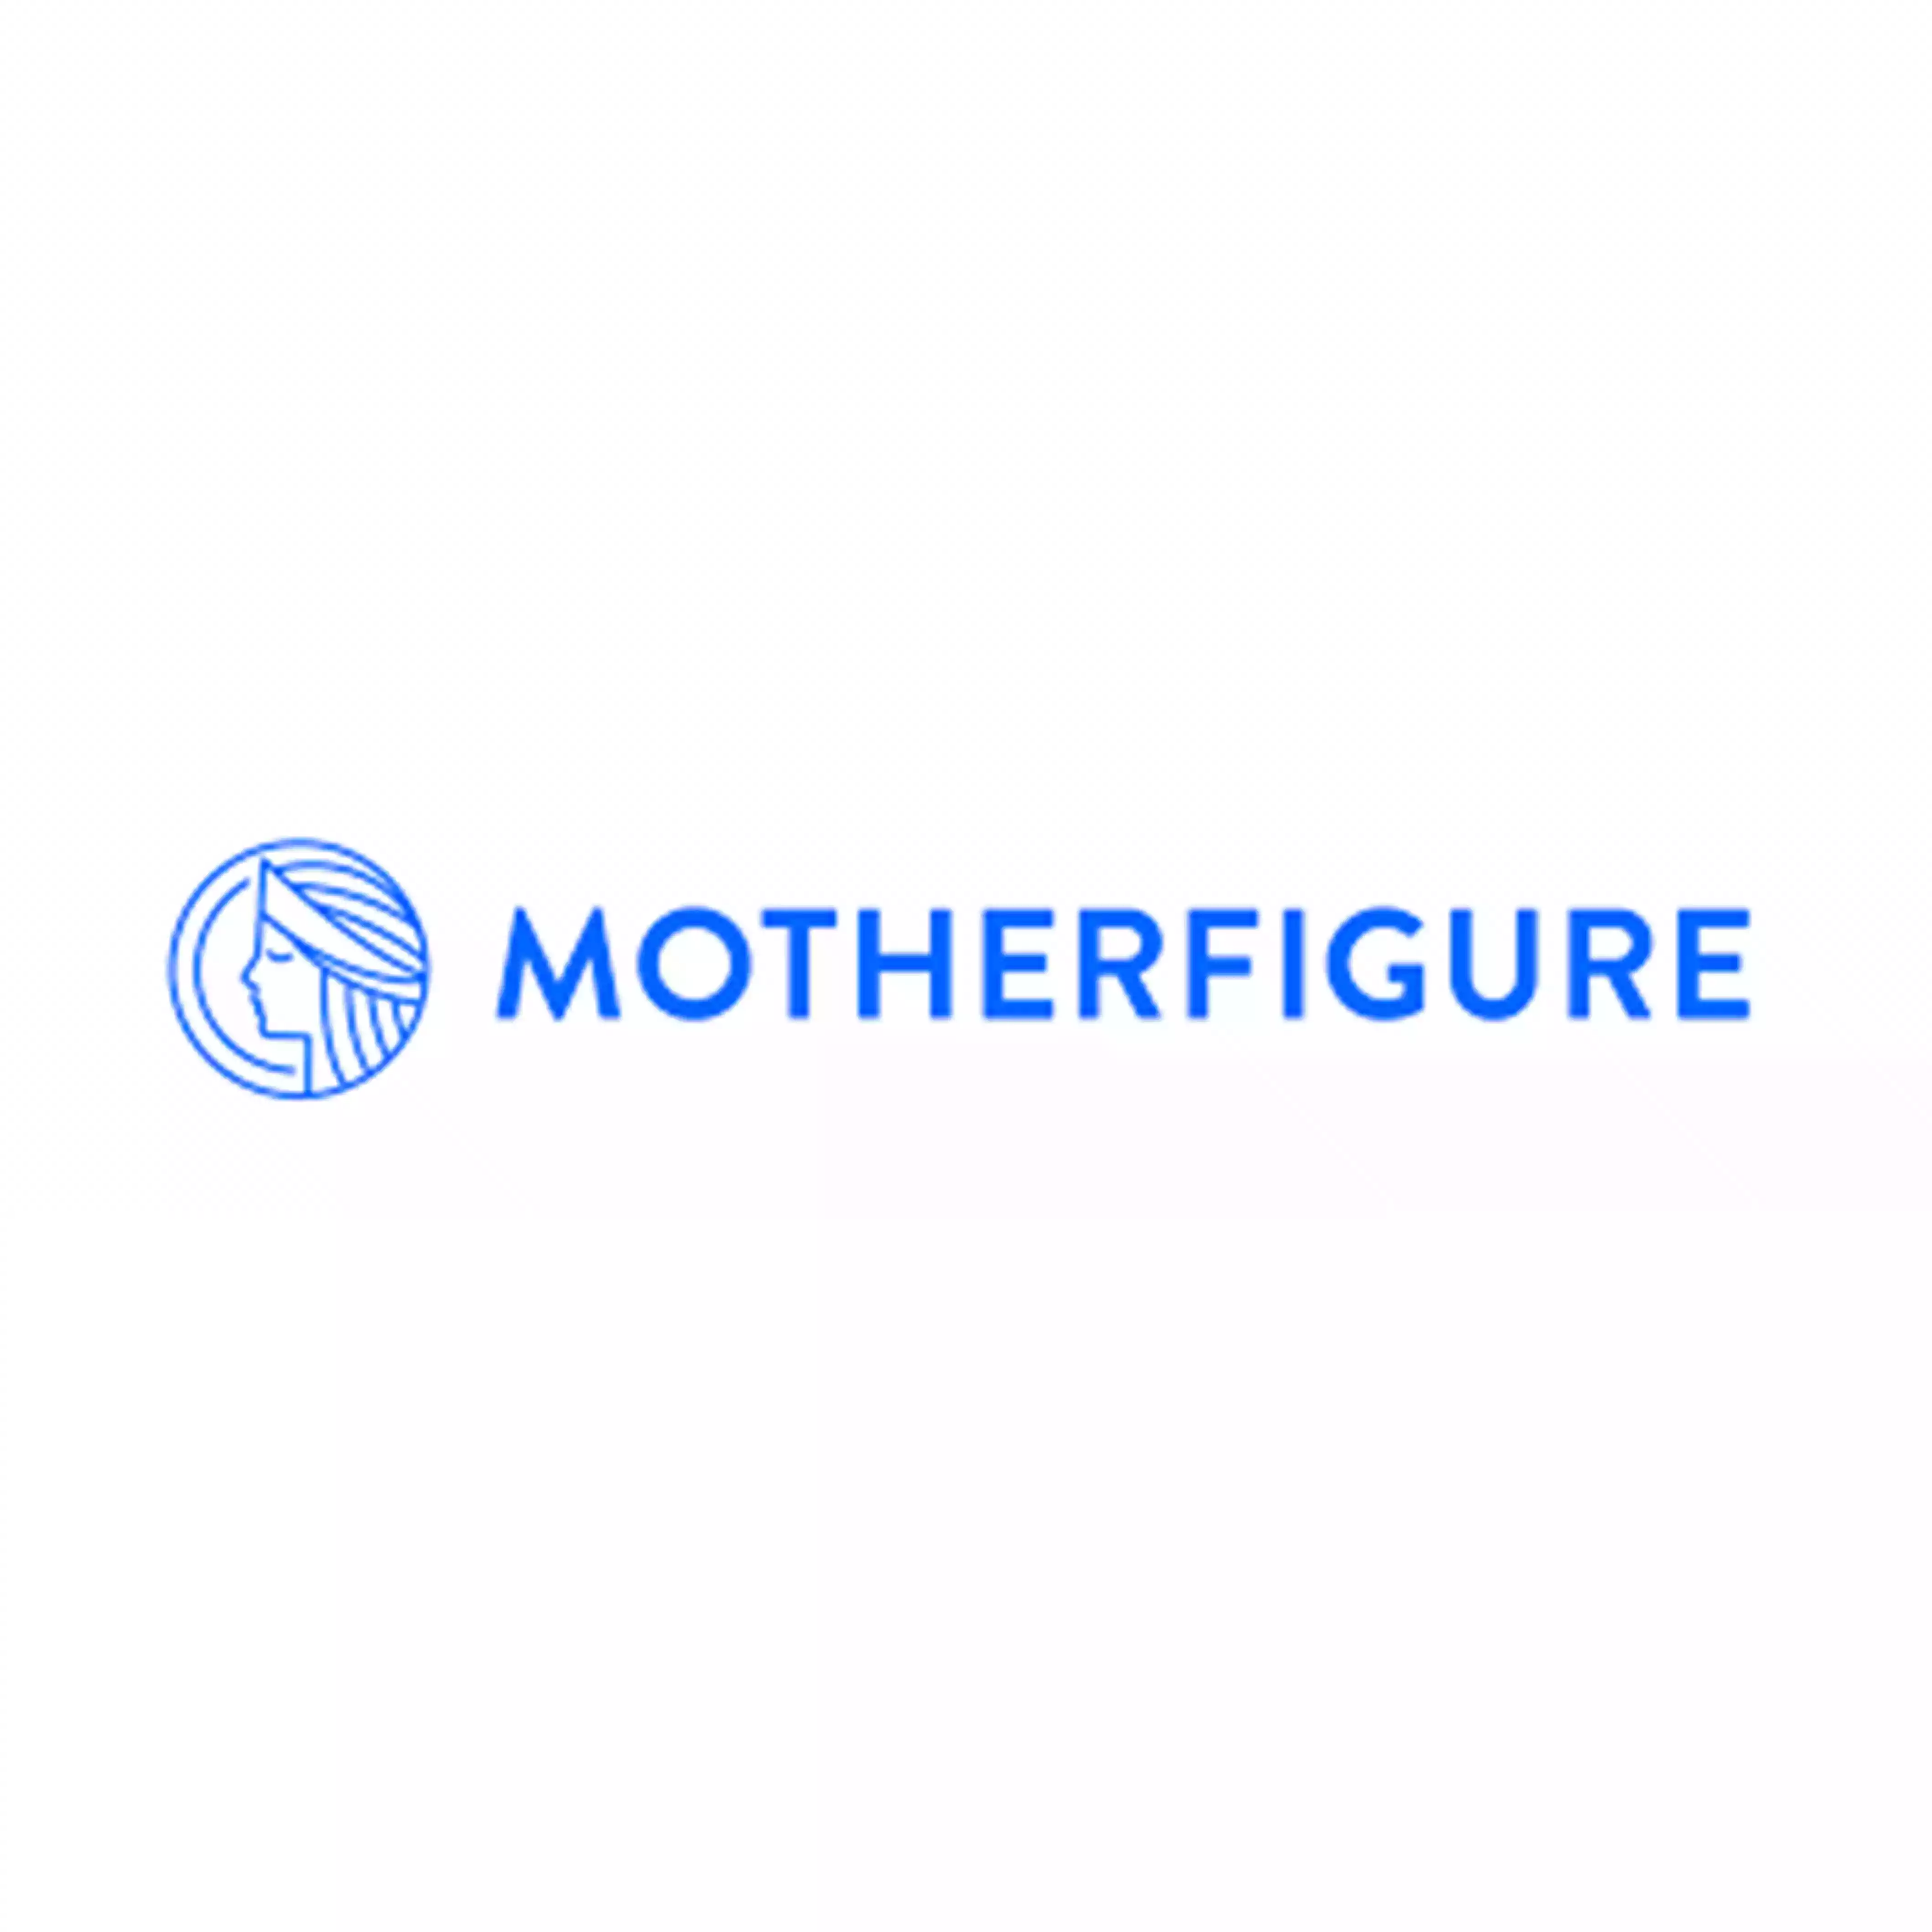 Shop Motherfigure logo